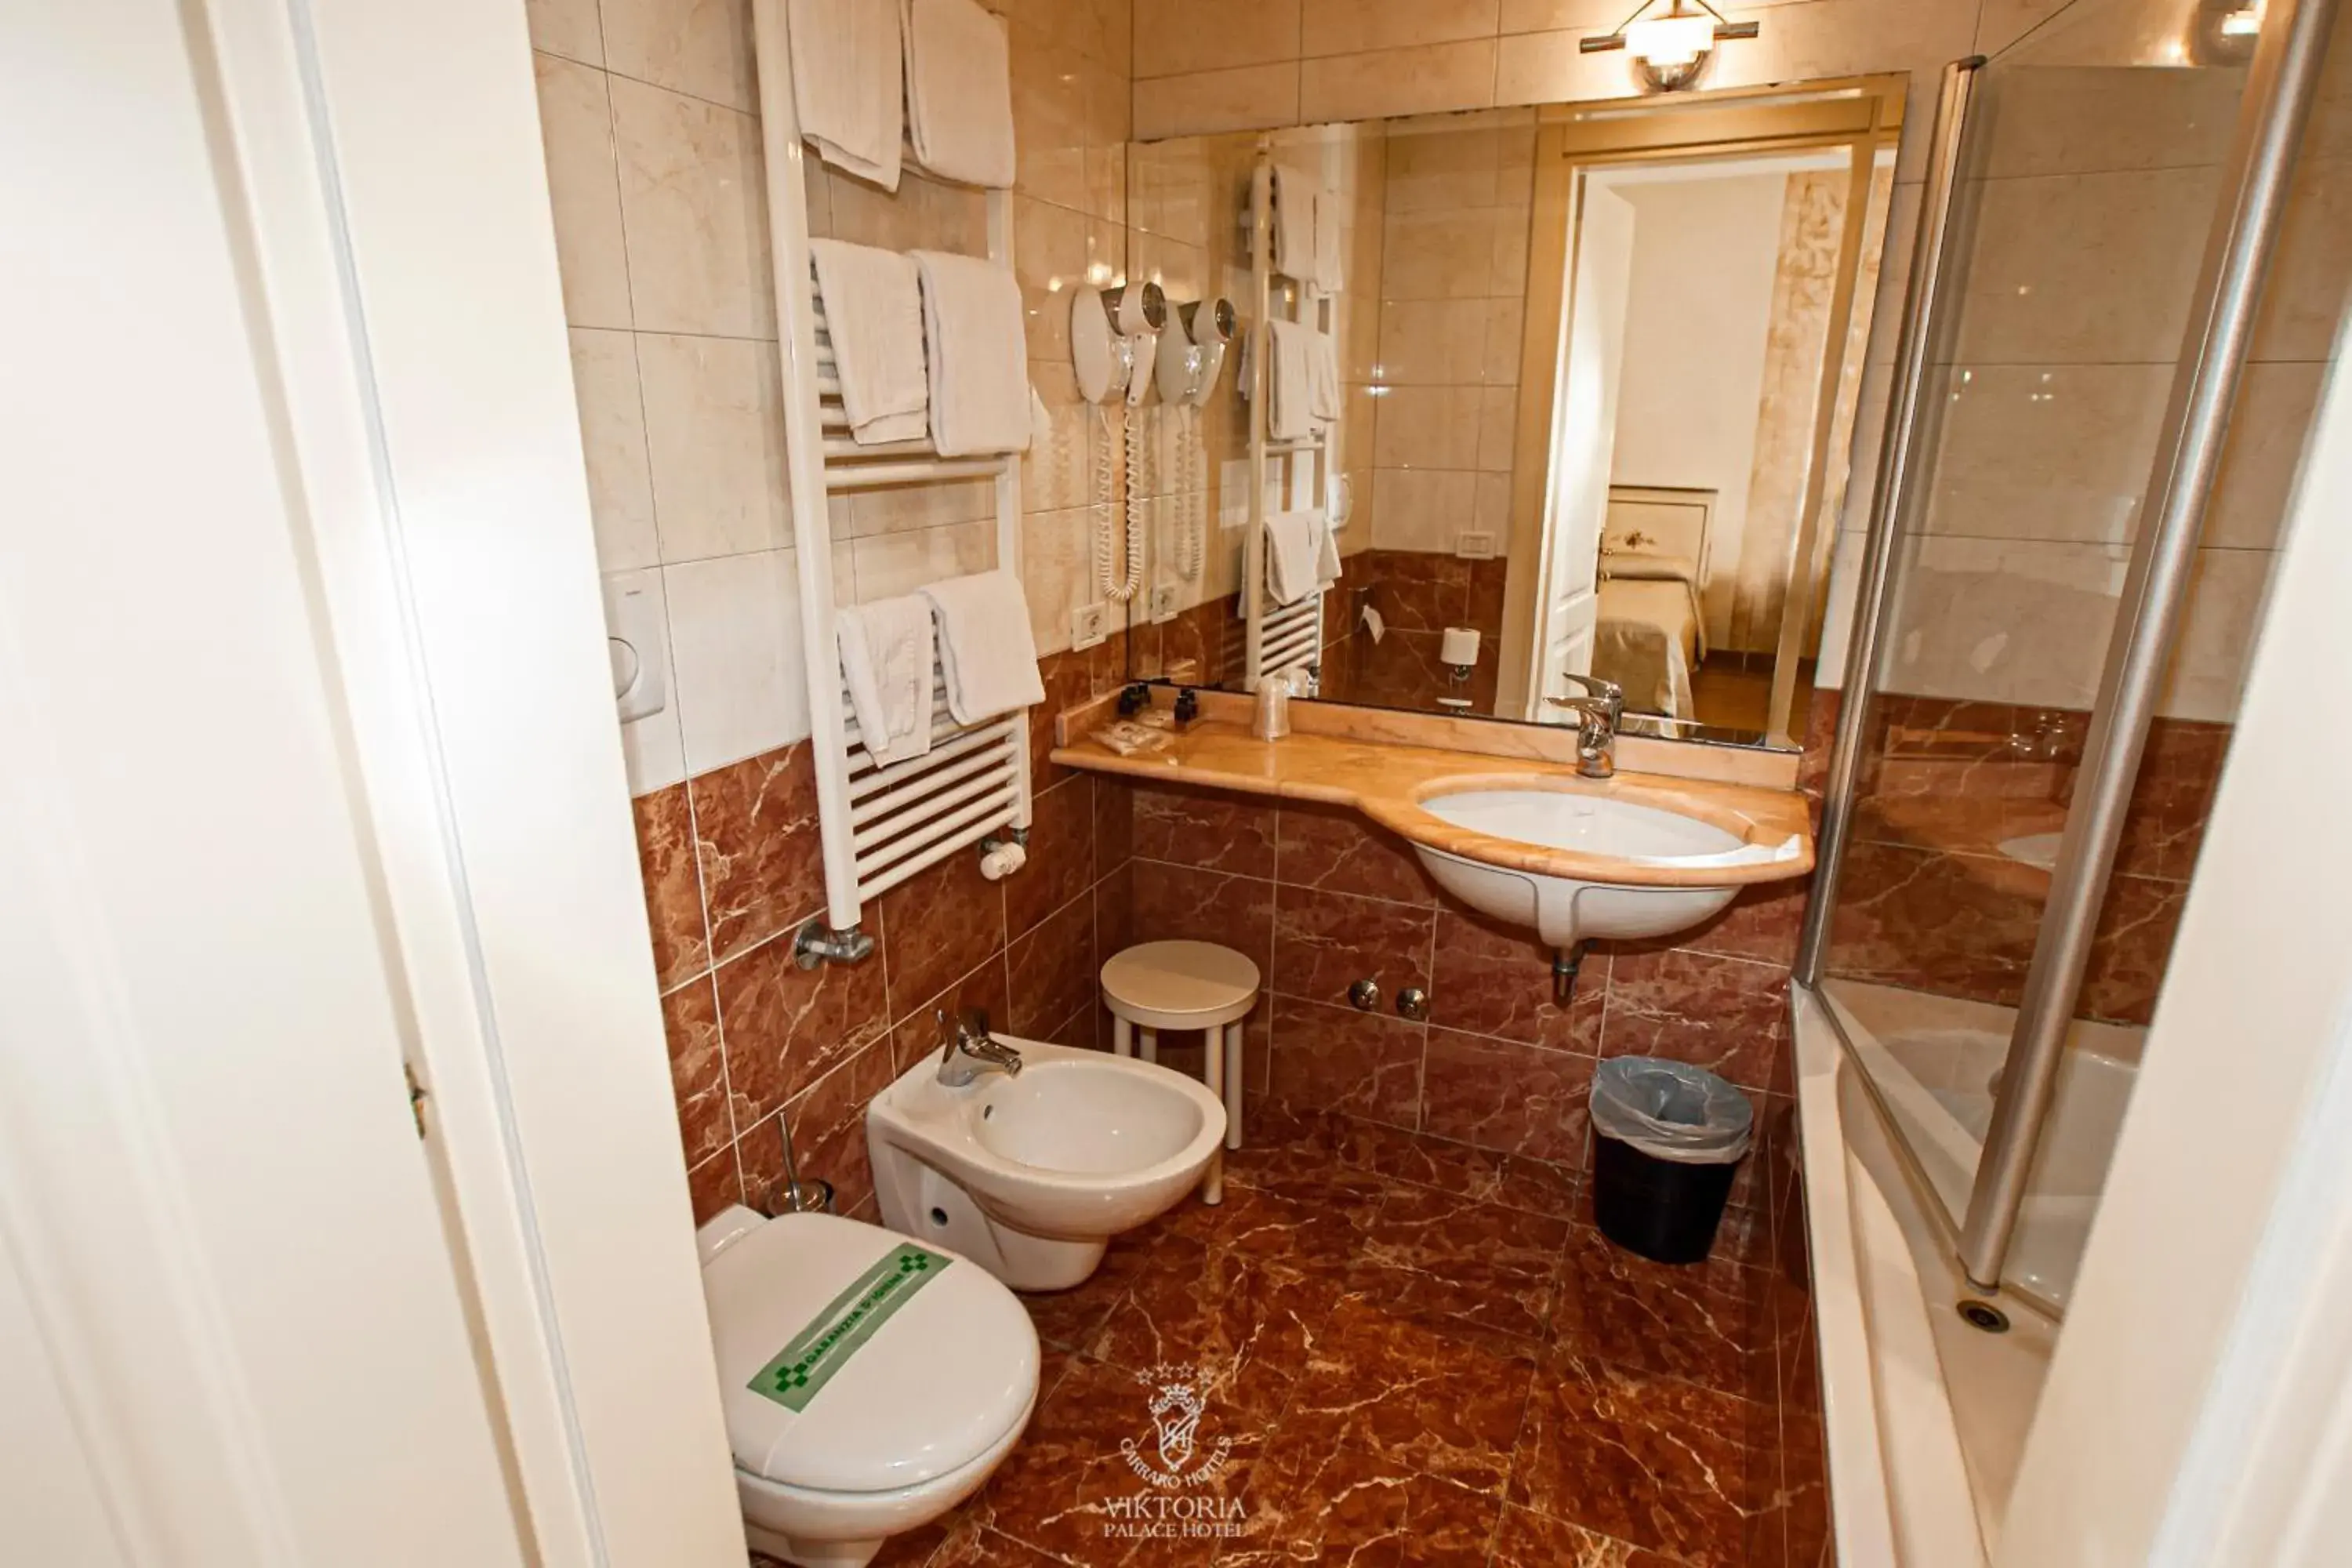 Bathroom in Viktoria Palace Hotel